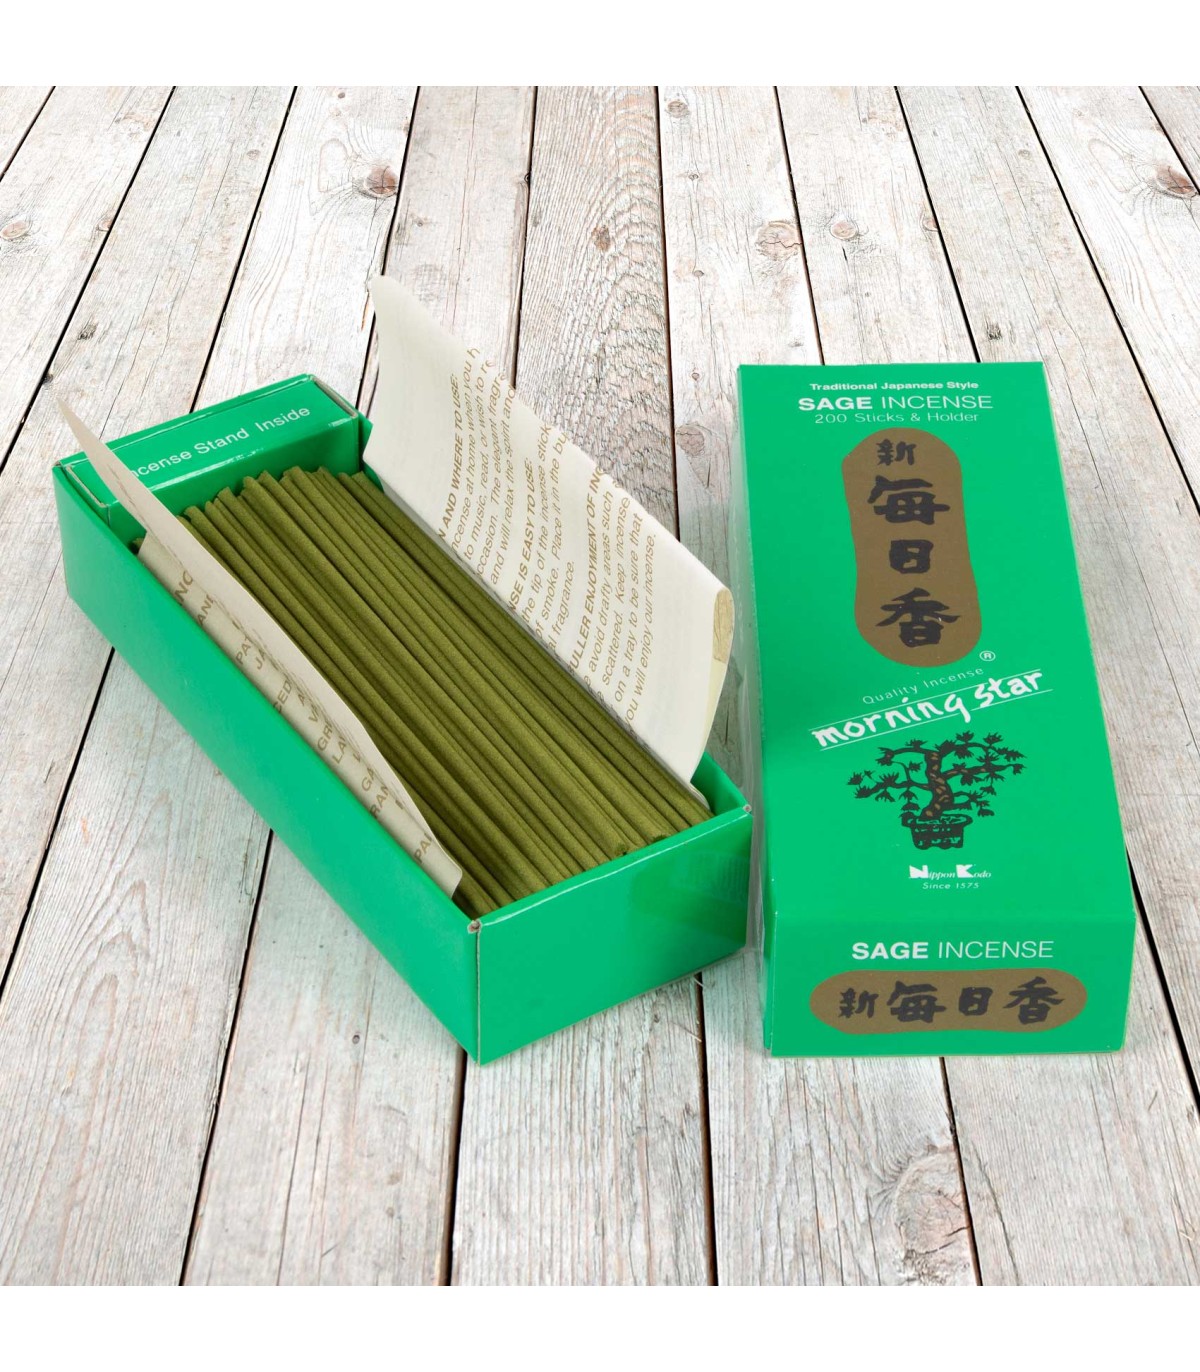 Caja de 50 varitas de incienso japonés, MORNINGSTAR, aroma de cedro